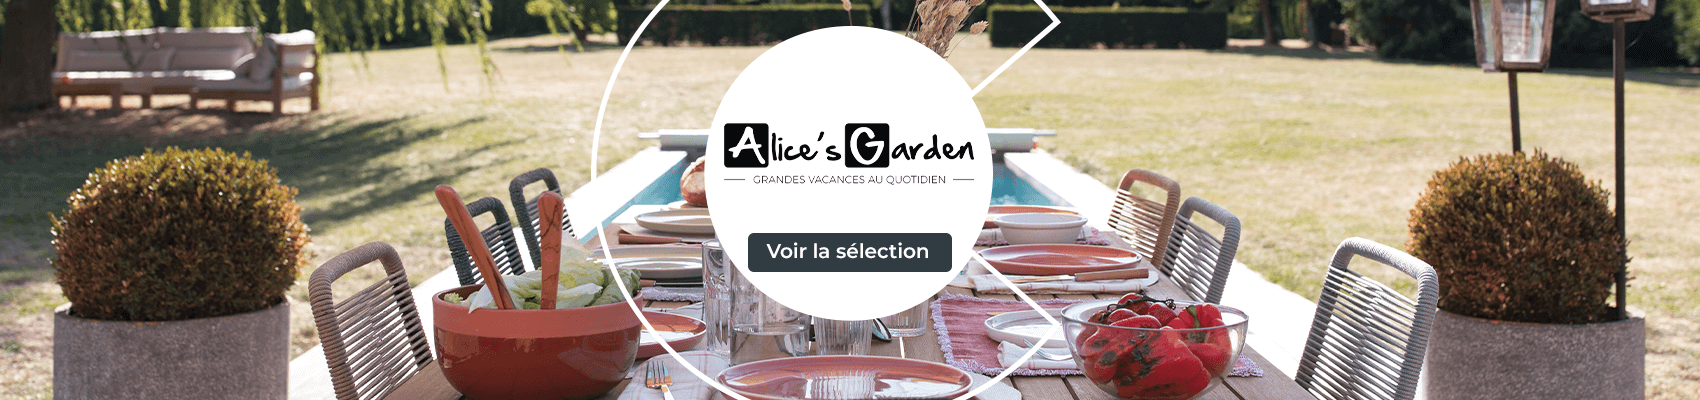 Toute l'offre Alice's Garden